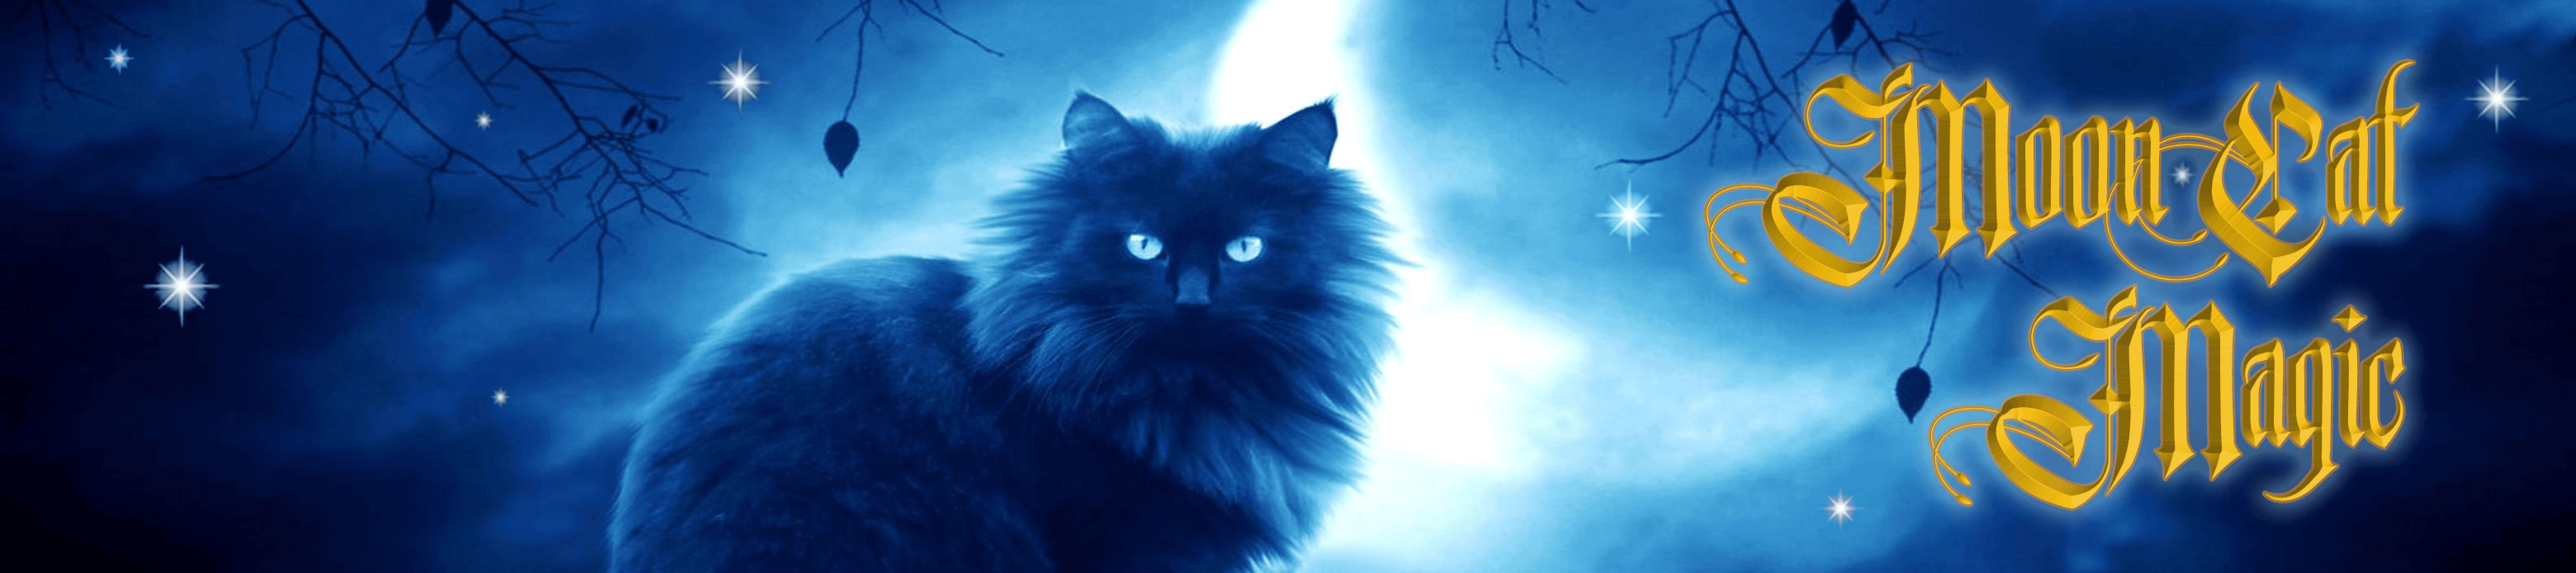 Moon Cat Magic